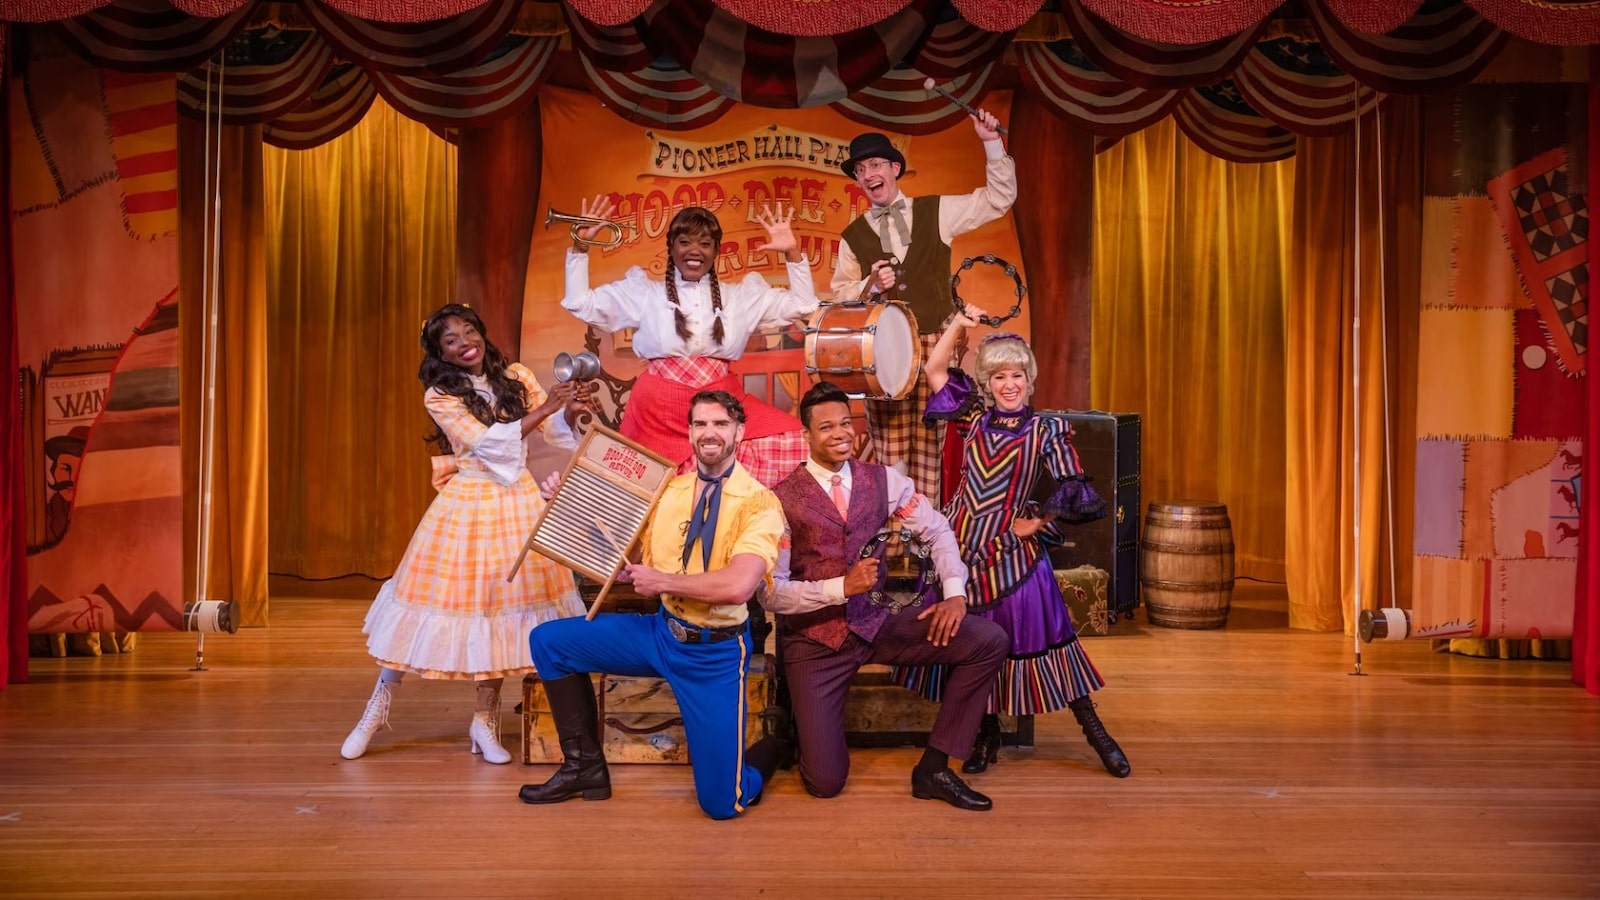 The A-B-Cs of Hoop-Dee-Doo: A History of Disney’s Hoop-Dee-Doo Musical Revue